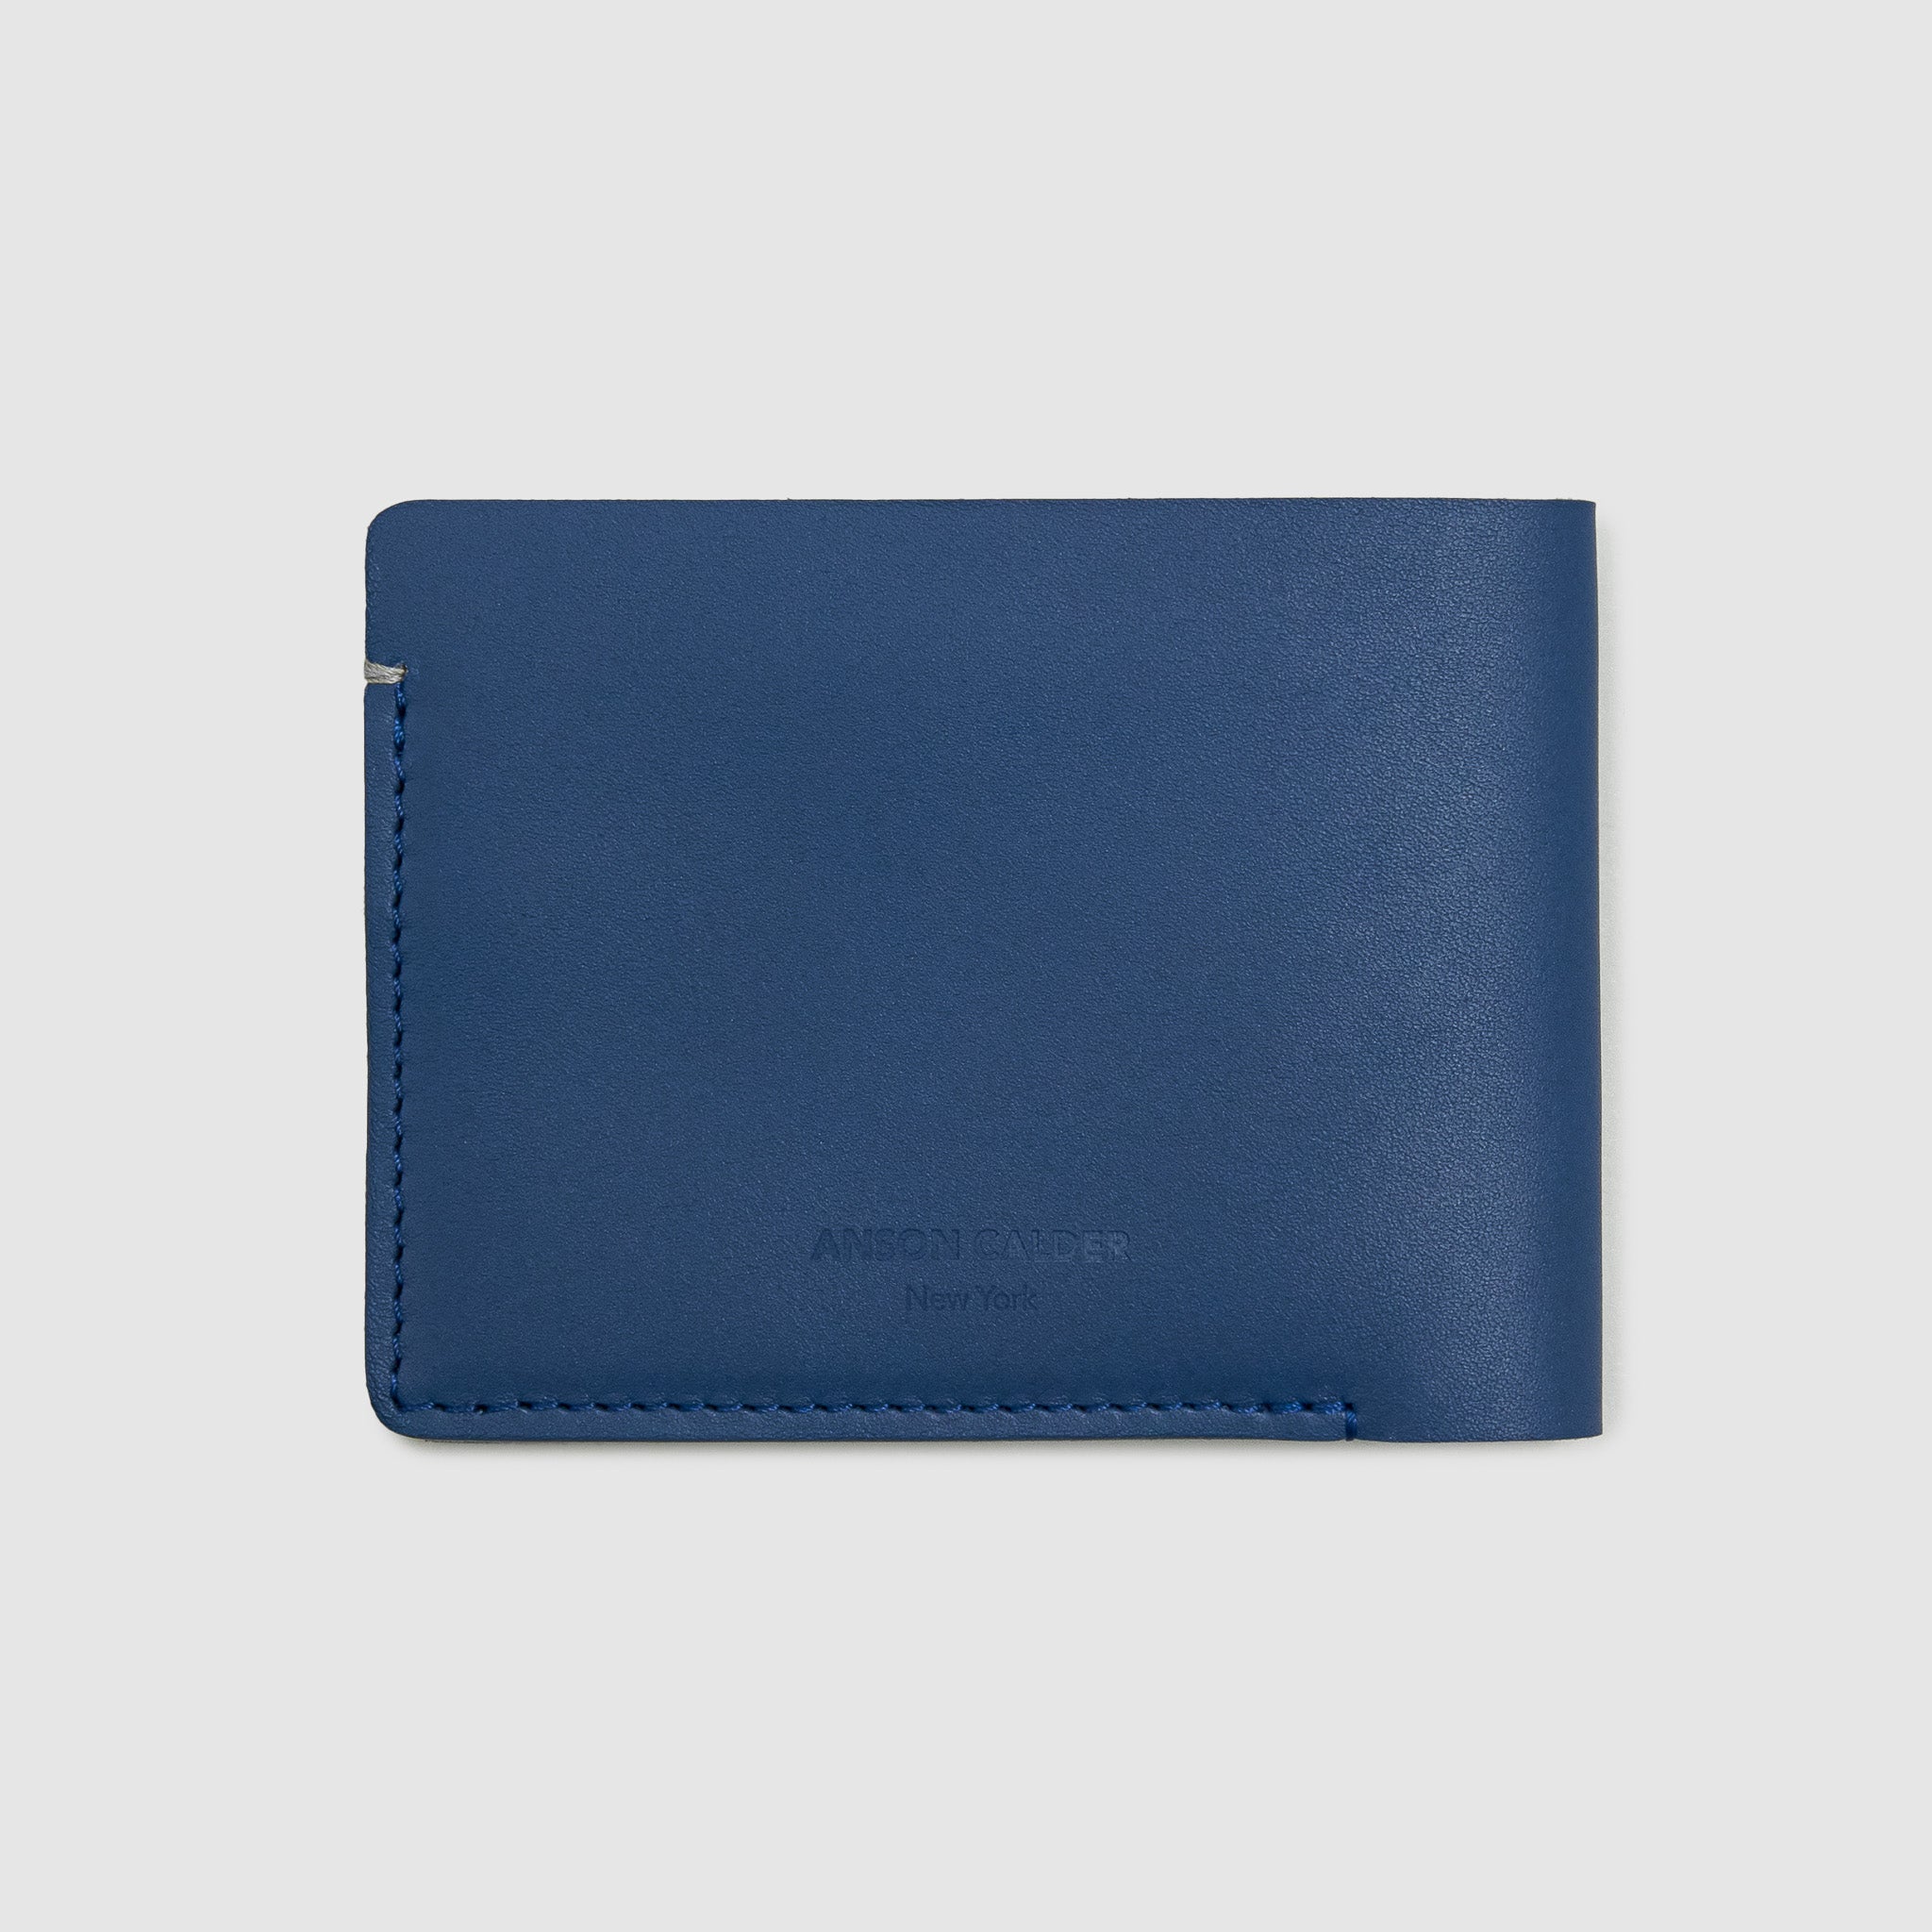 Anson Calder Billfold Wallet French Calfskin Leather _cobalt